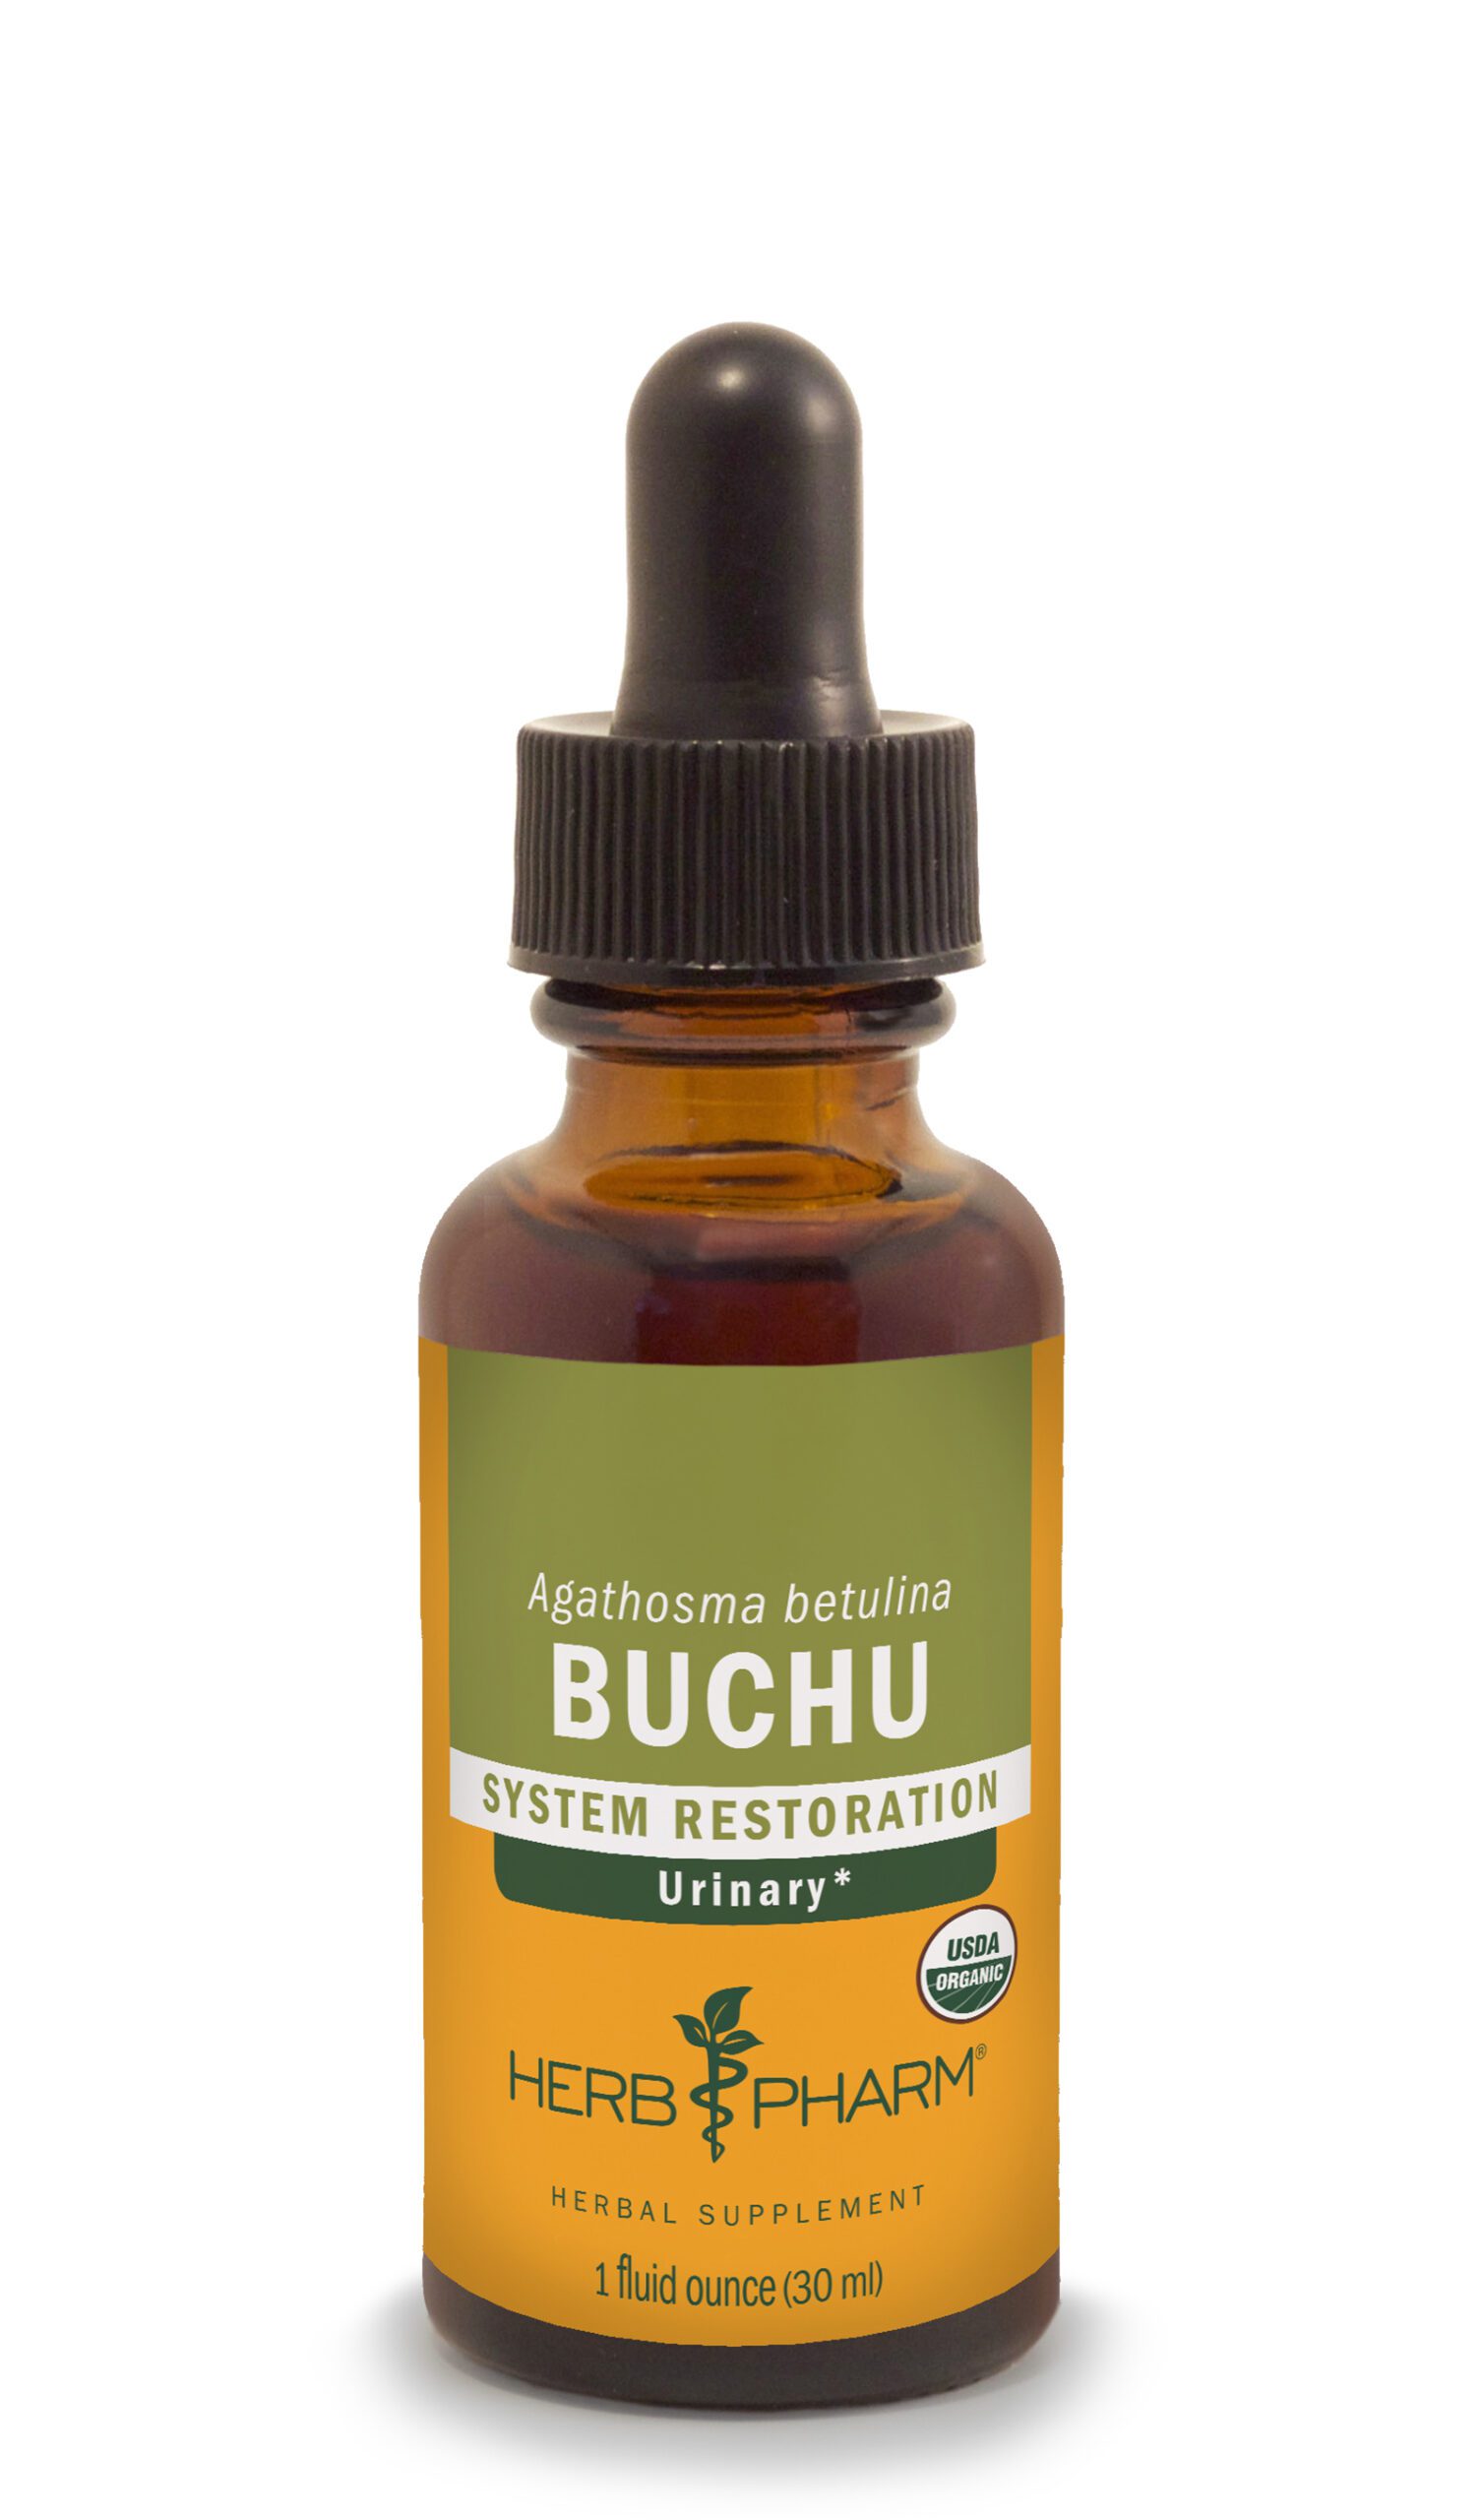 Product Listing Image for Herb Pharm Buchu Tincture 1oz